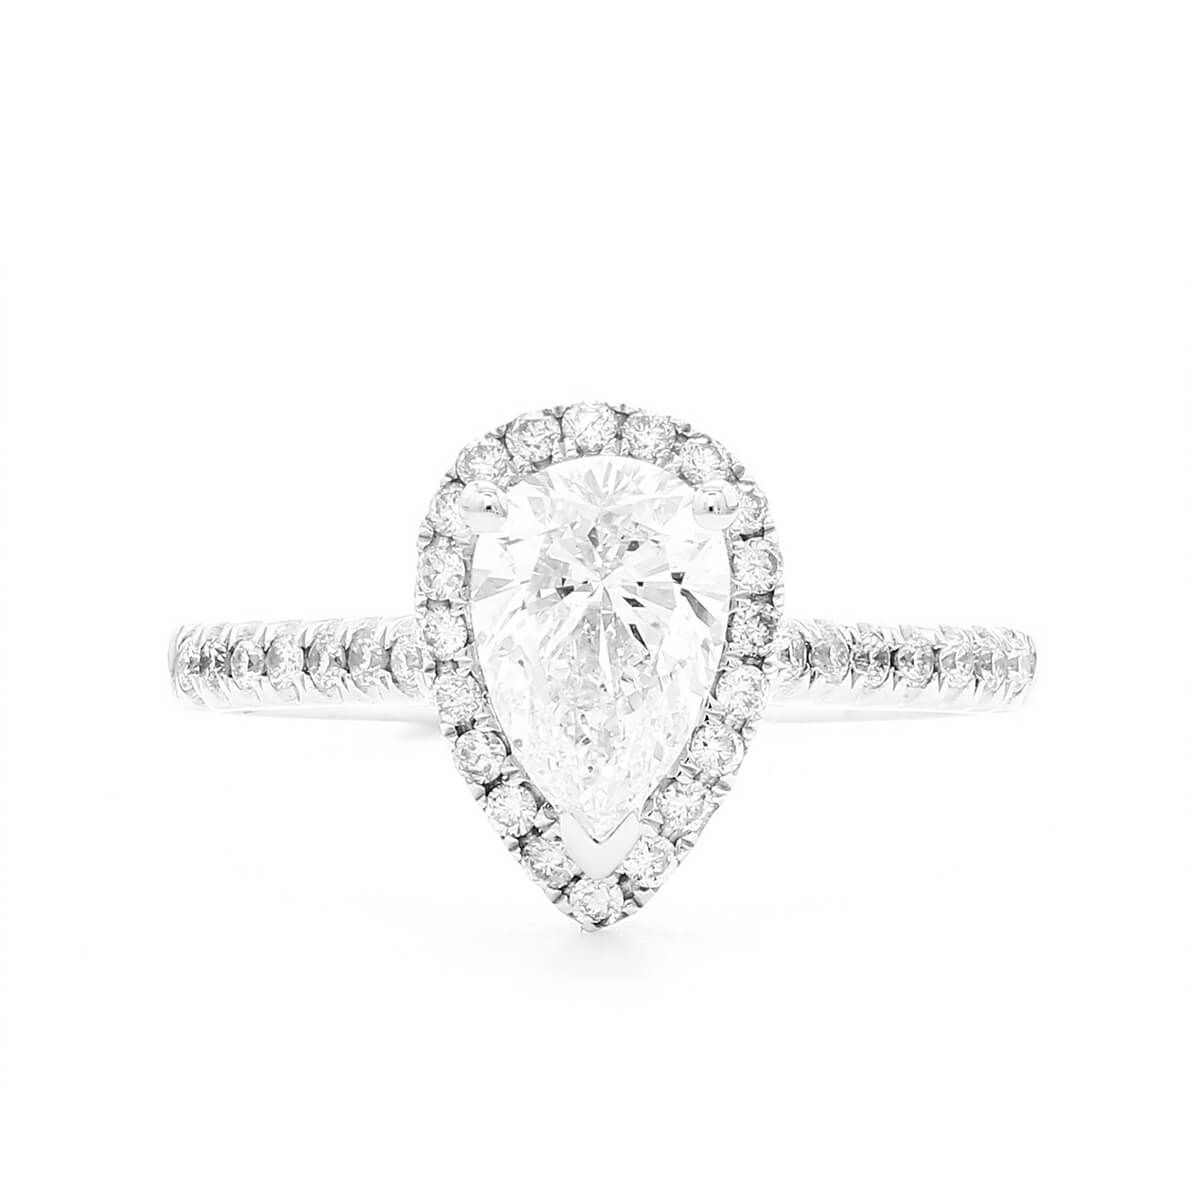  White Diamond Ring, 0.90 Ct. (1.17 Ct. TW), Pear shape, GIA Certified, 2214434181